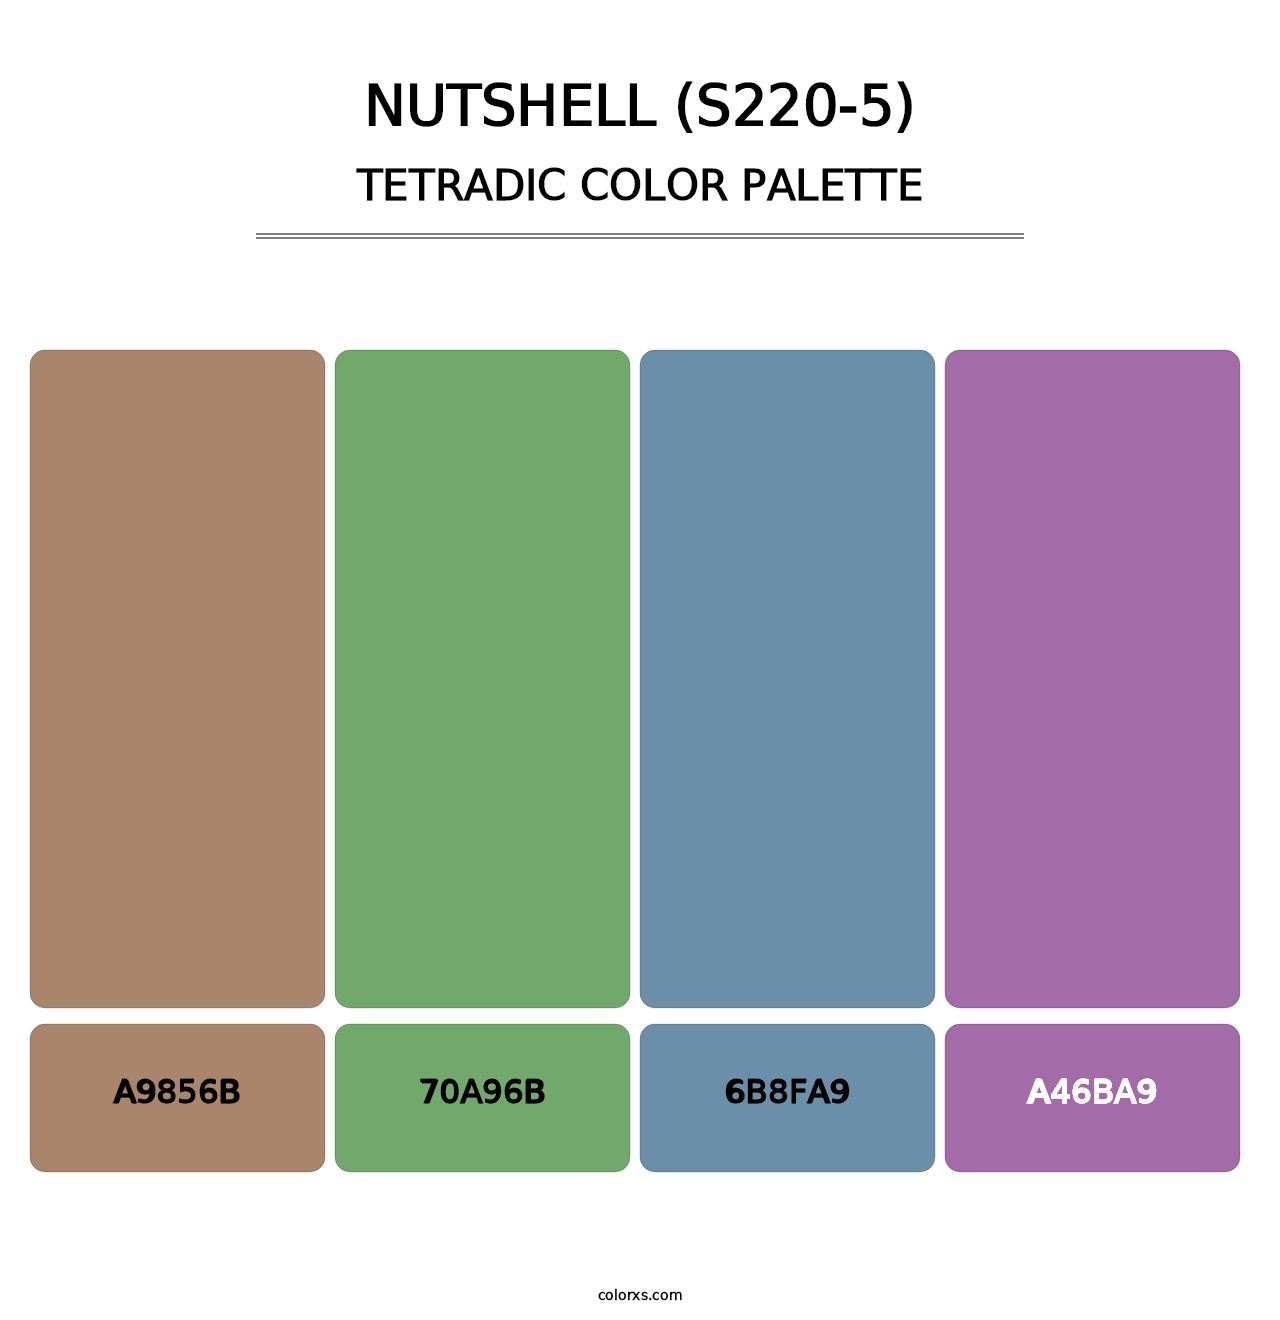 Nutshell (S220-5) - Tetradic Color Palette